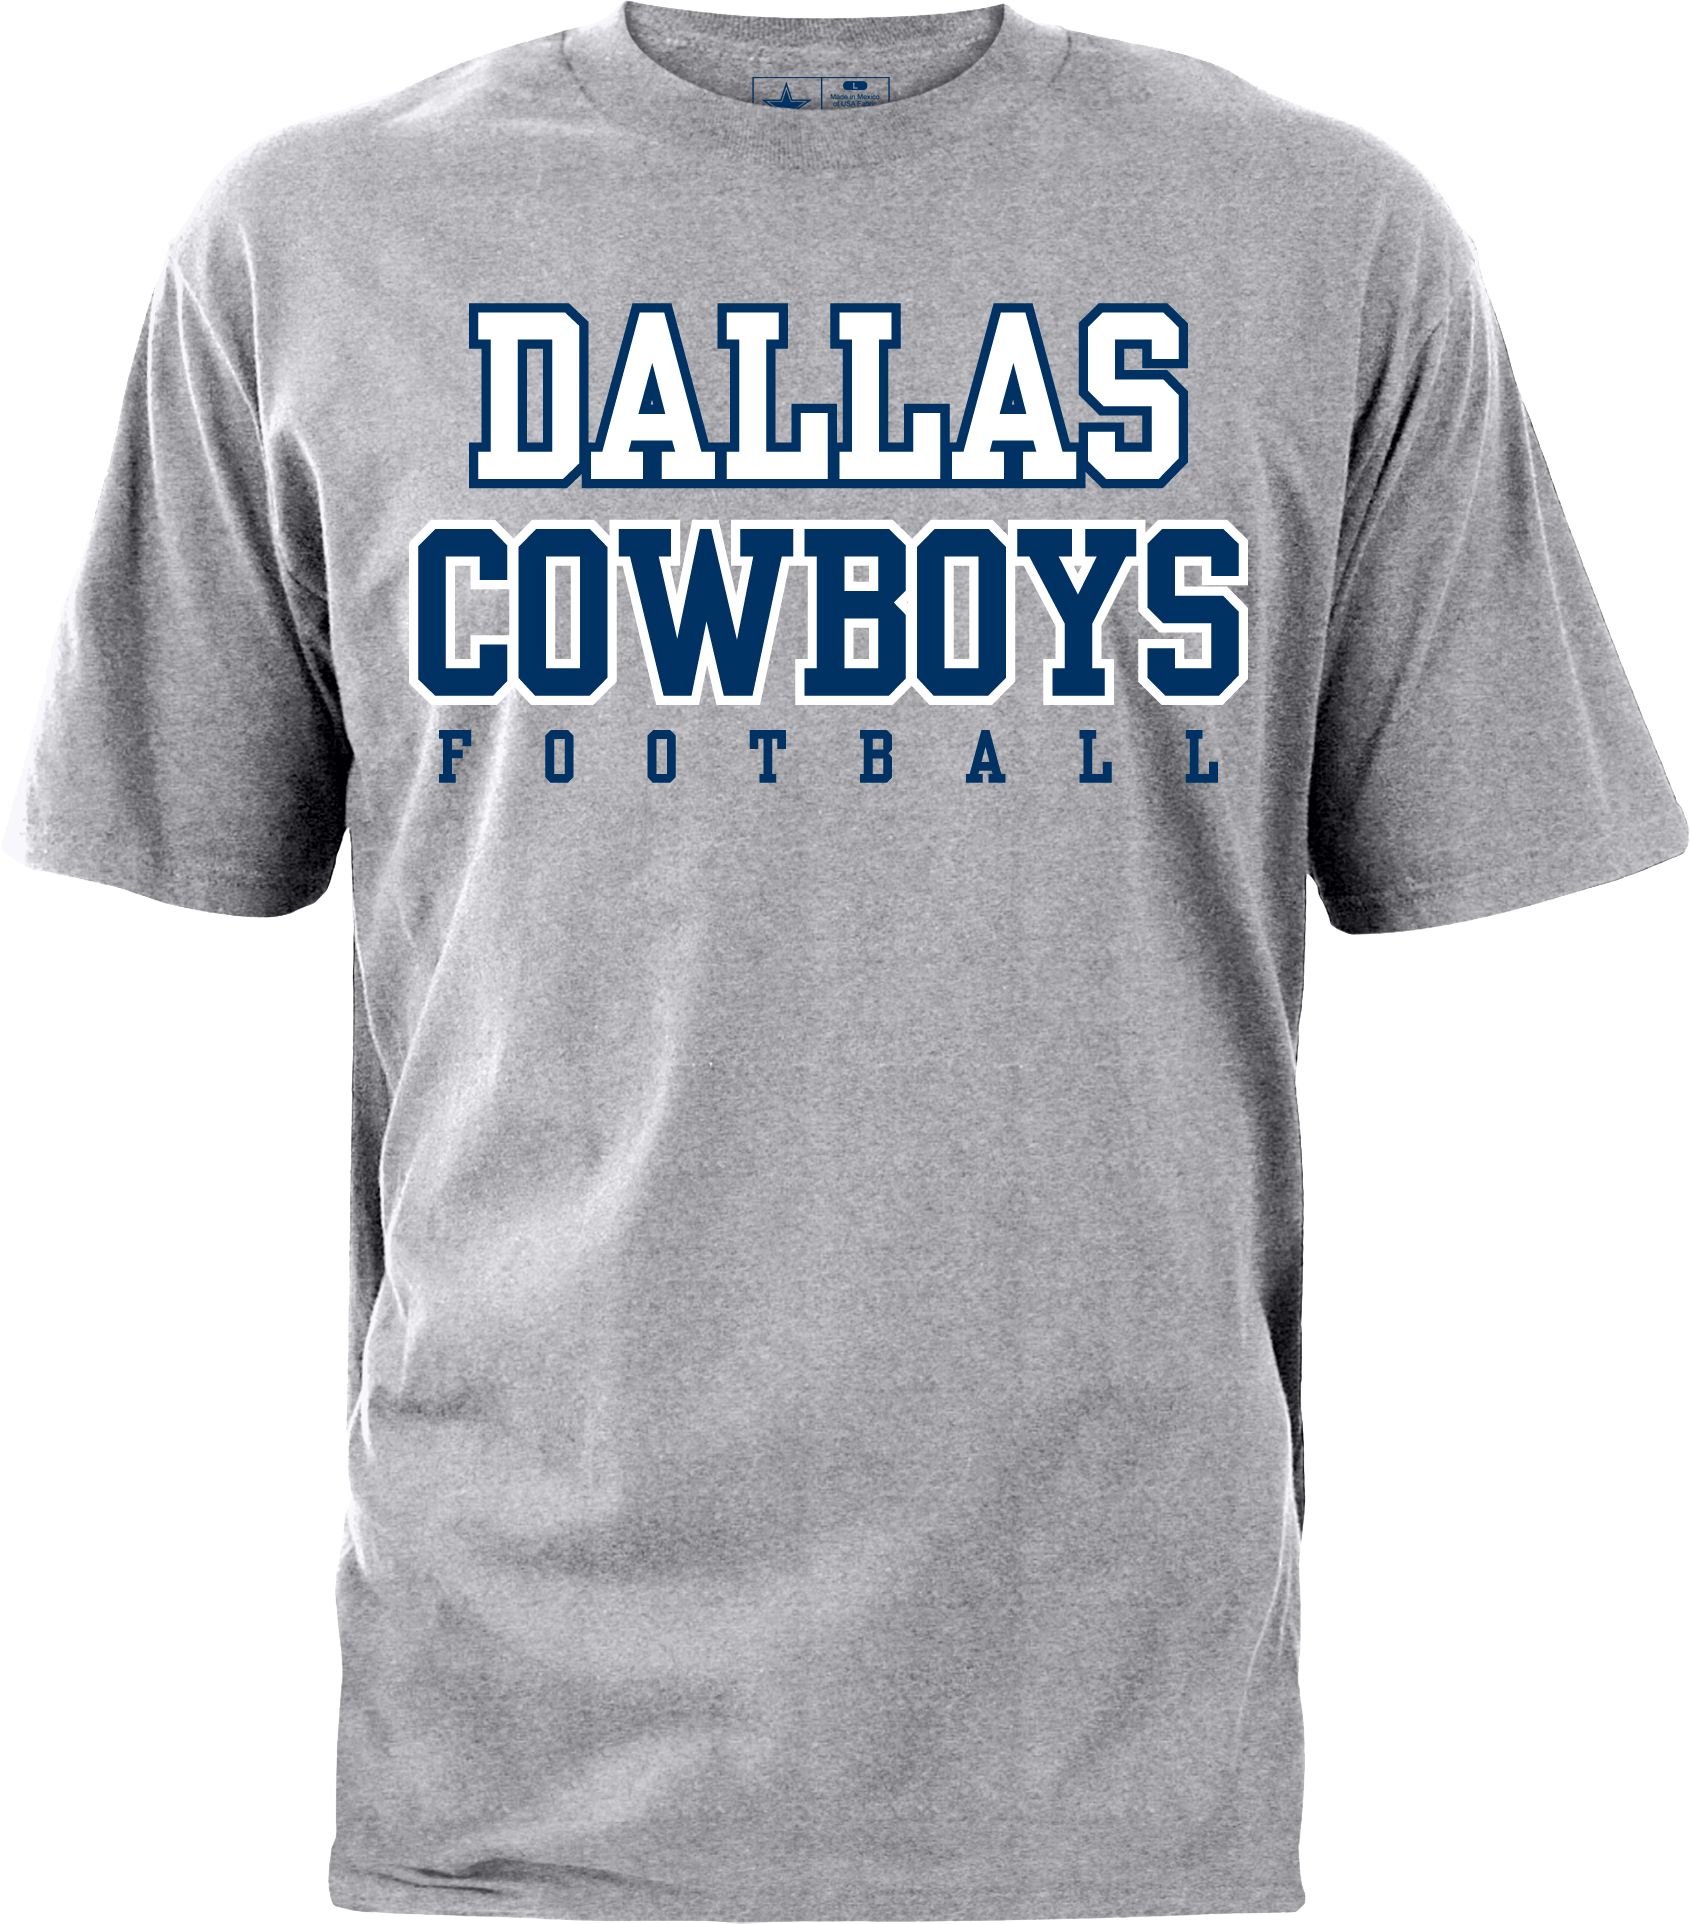 cowboys football shirt